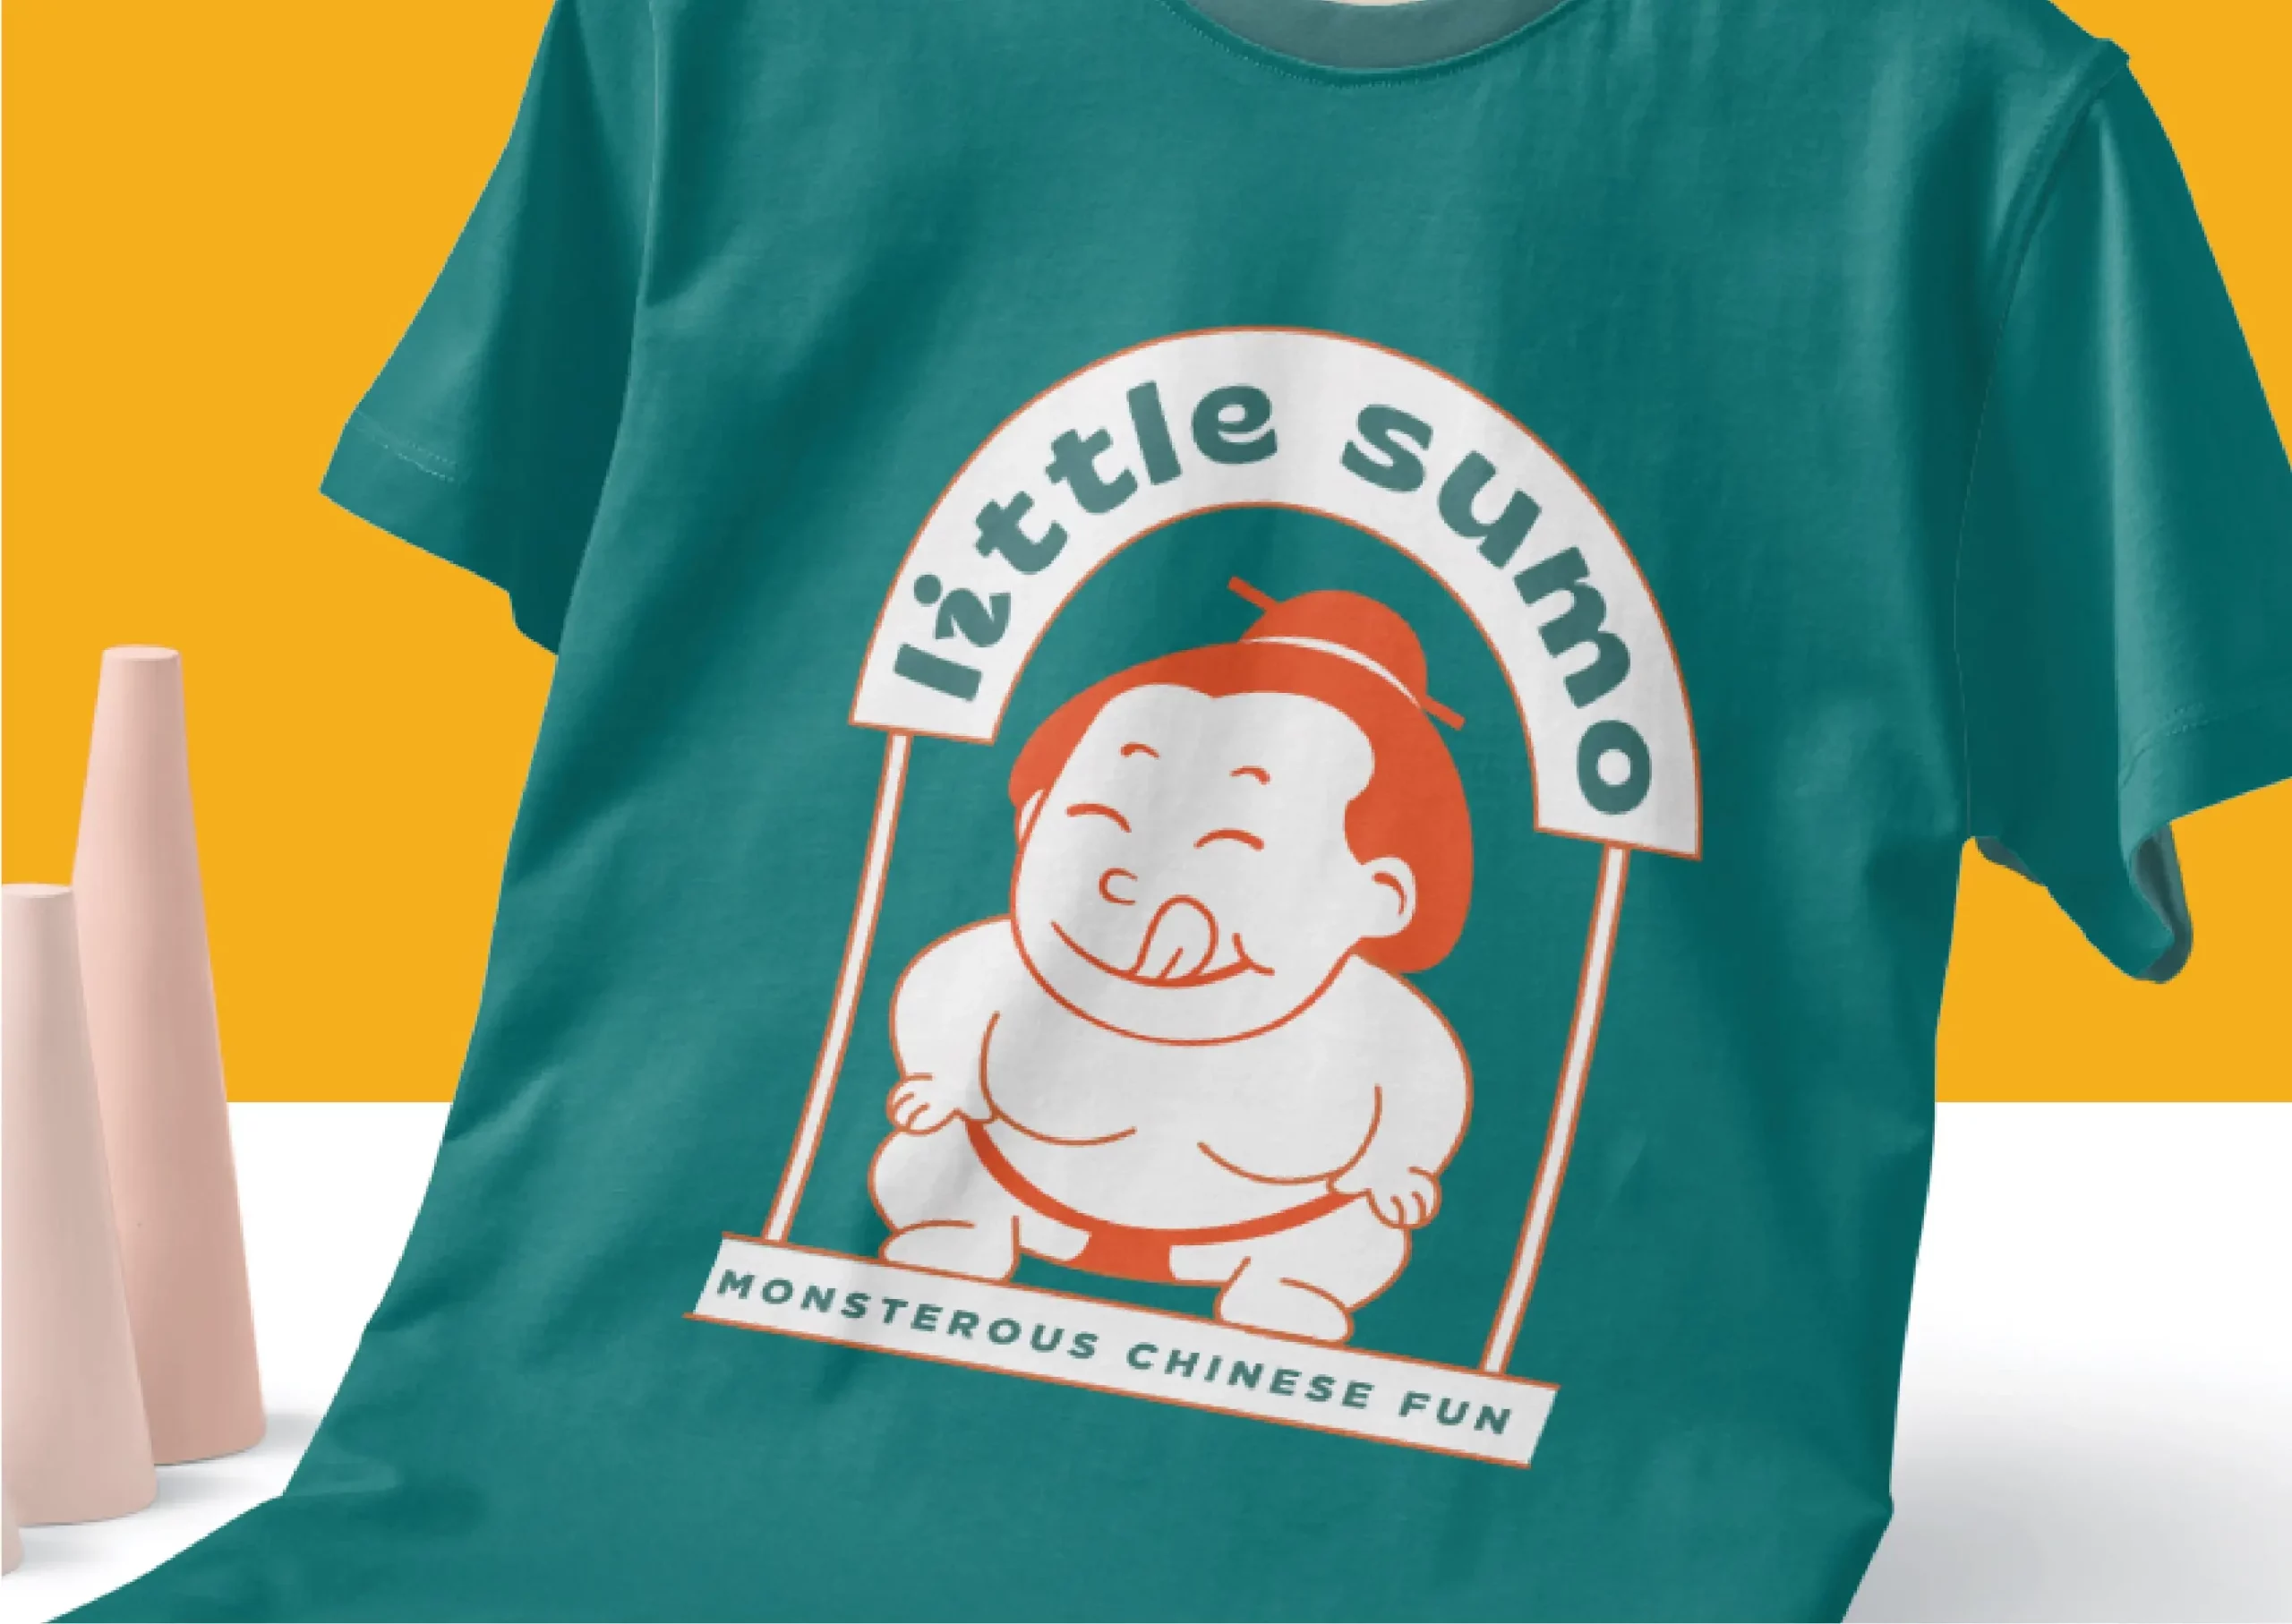 Little sumo t - shirt mockup.